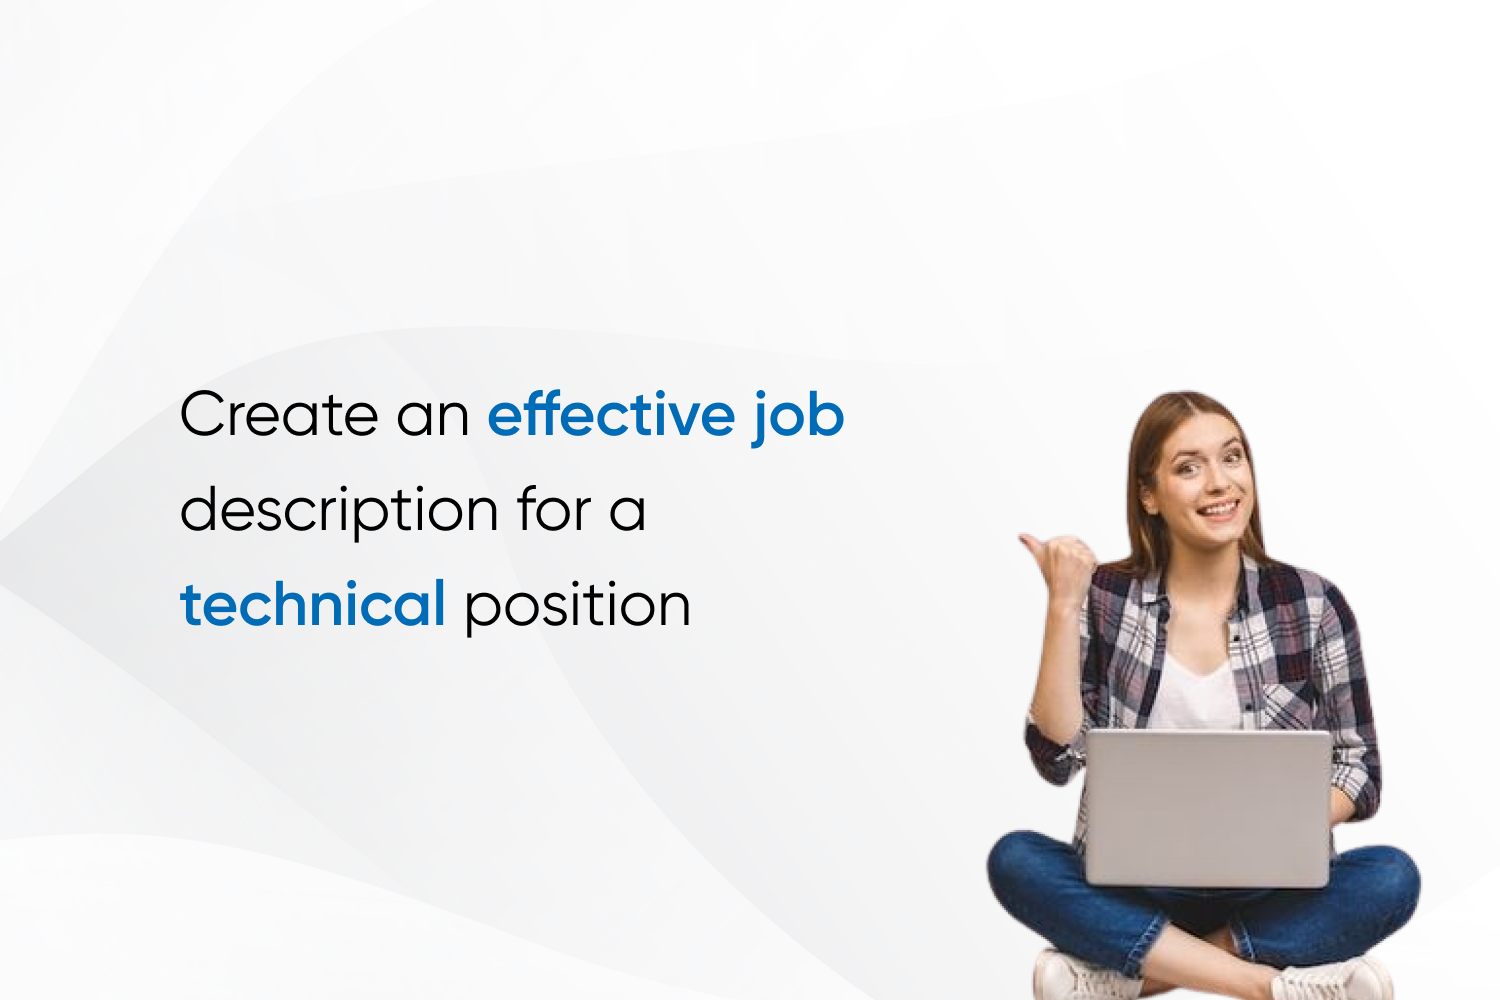 Create an effective job description for a technical position